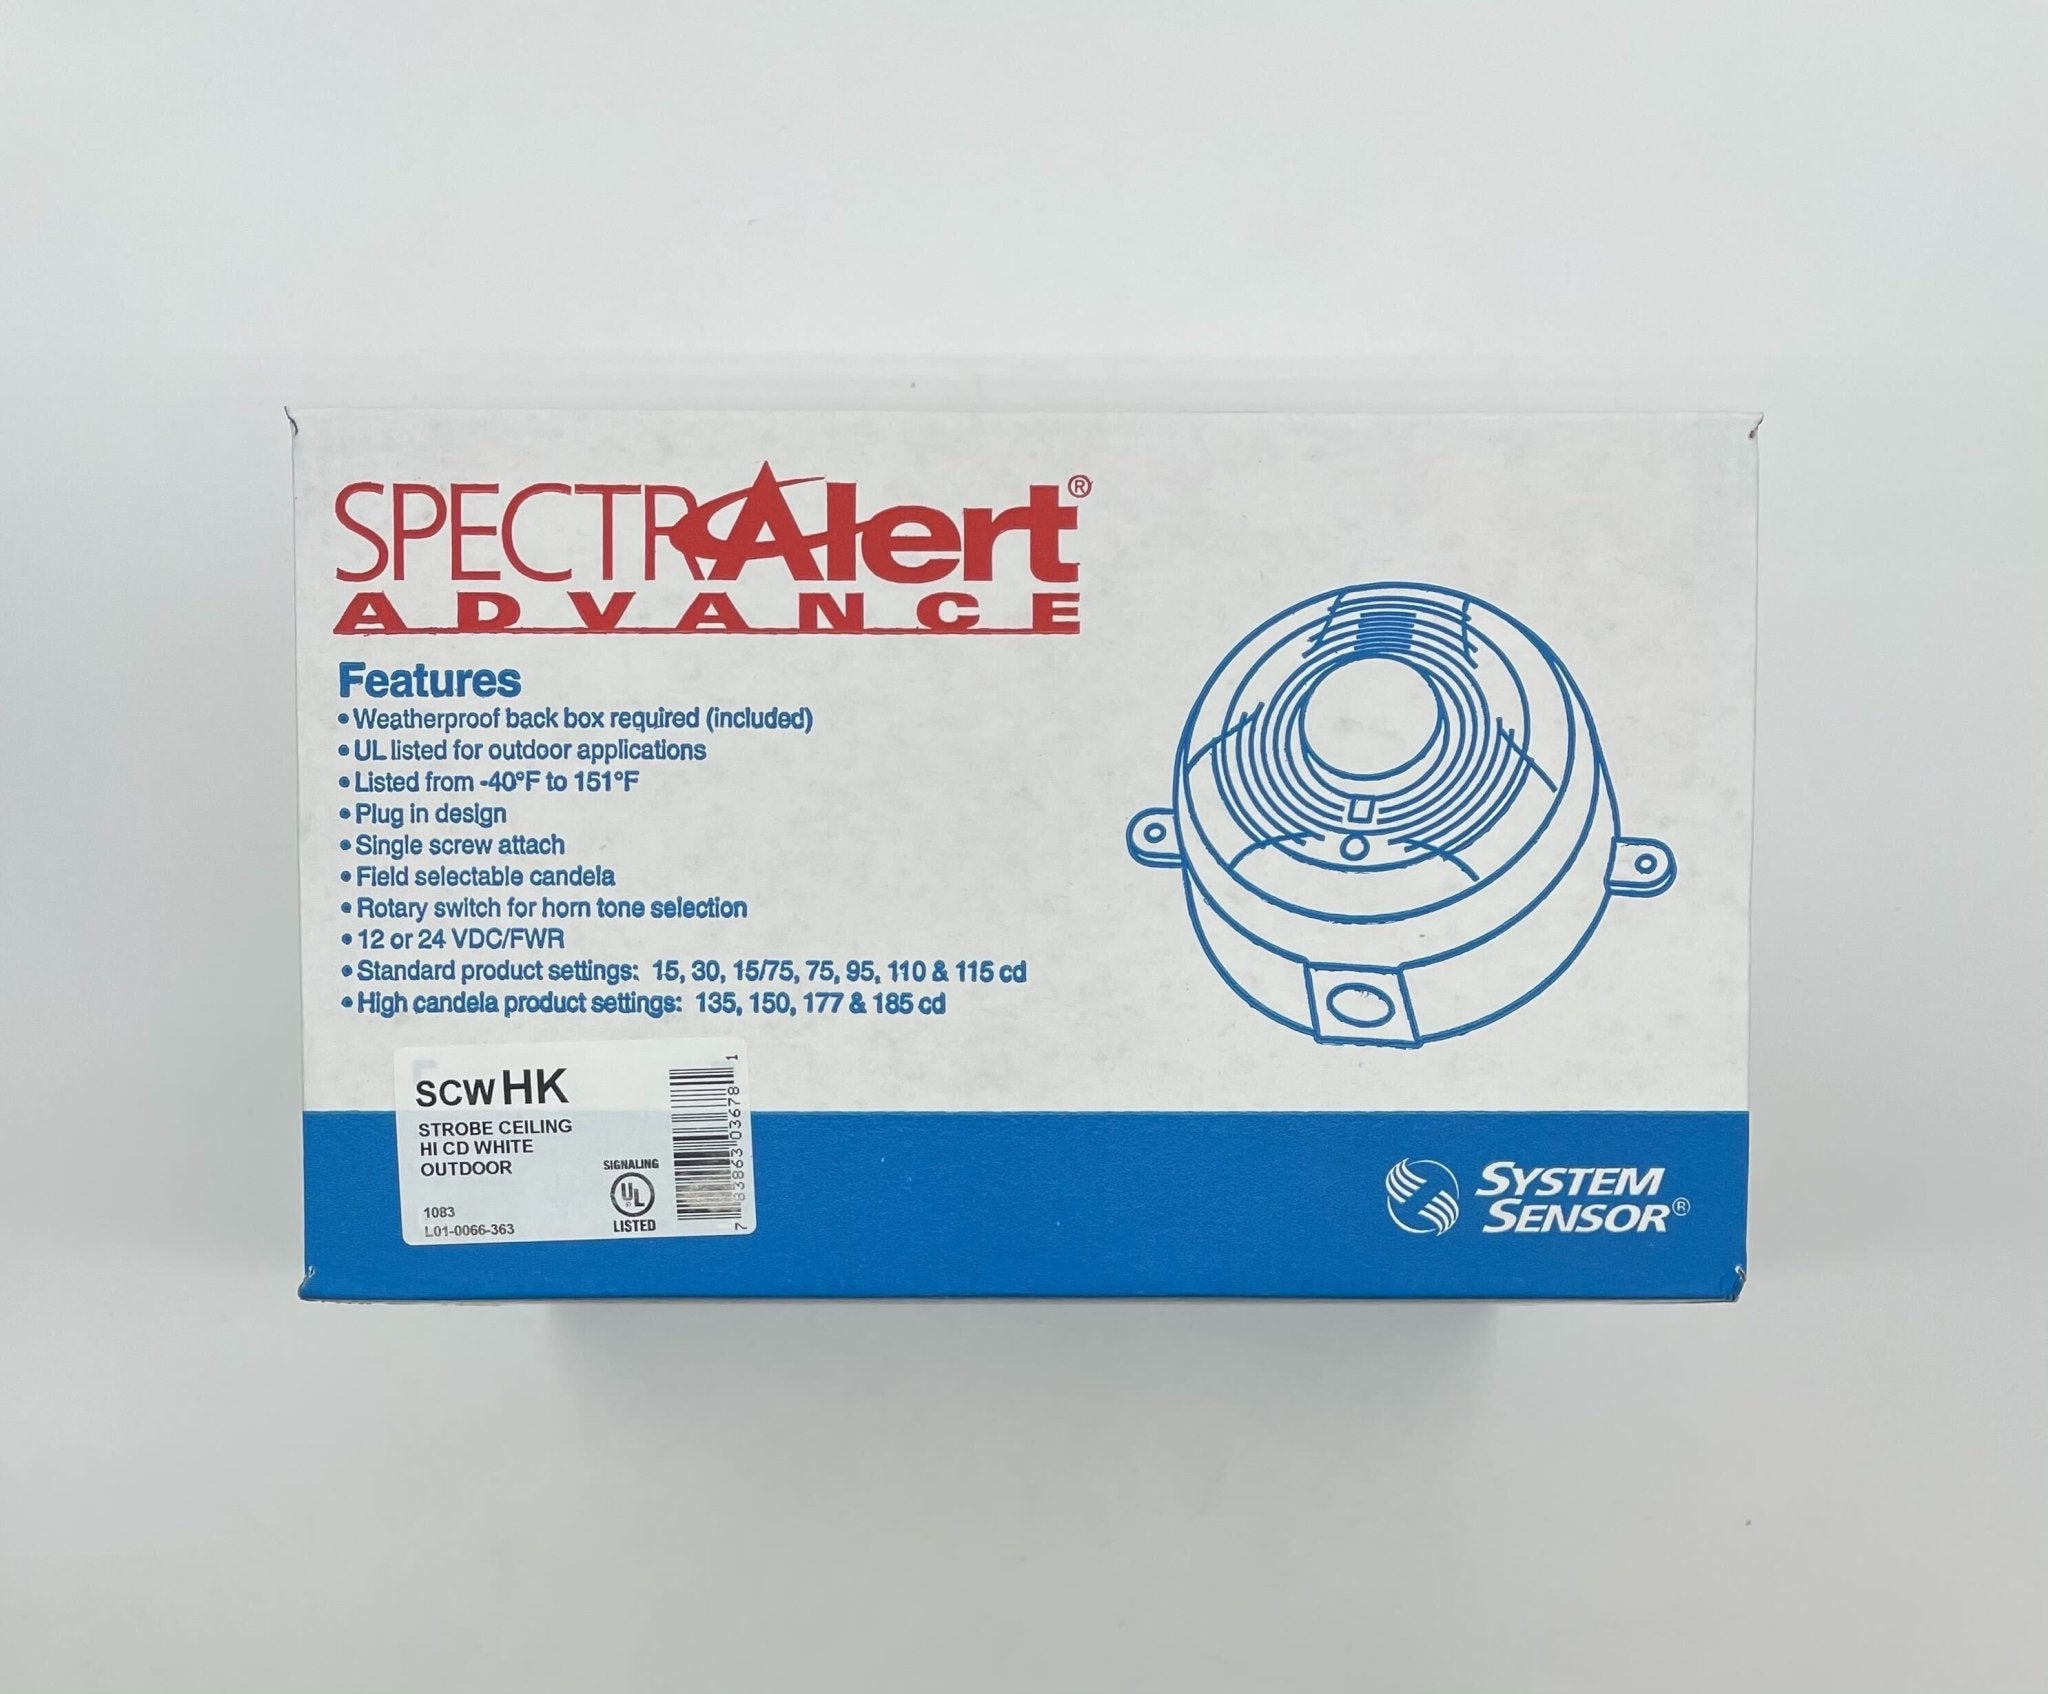 System Sensor SCWHK - The Fire Alarm Supplier